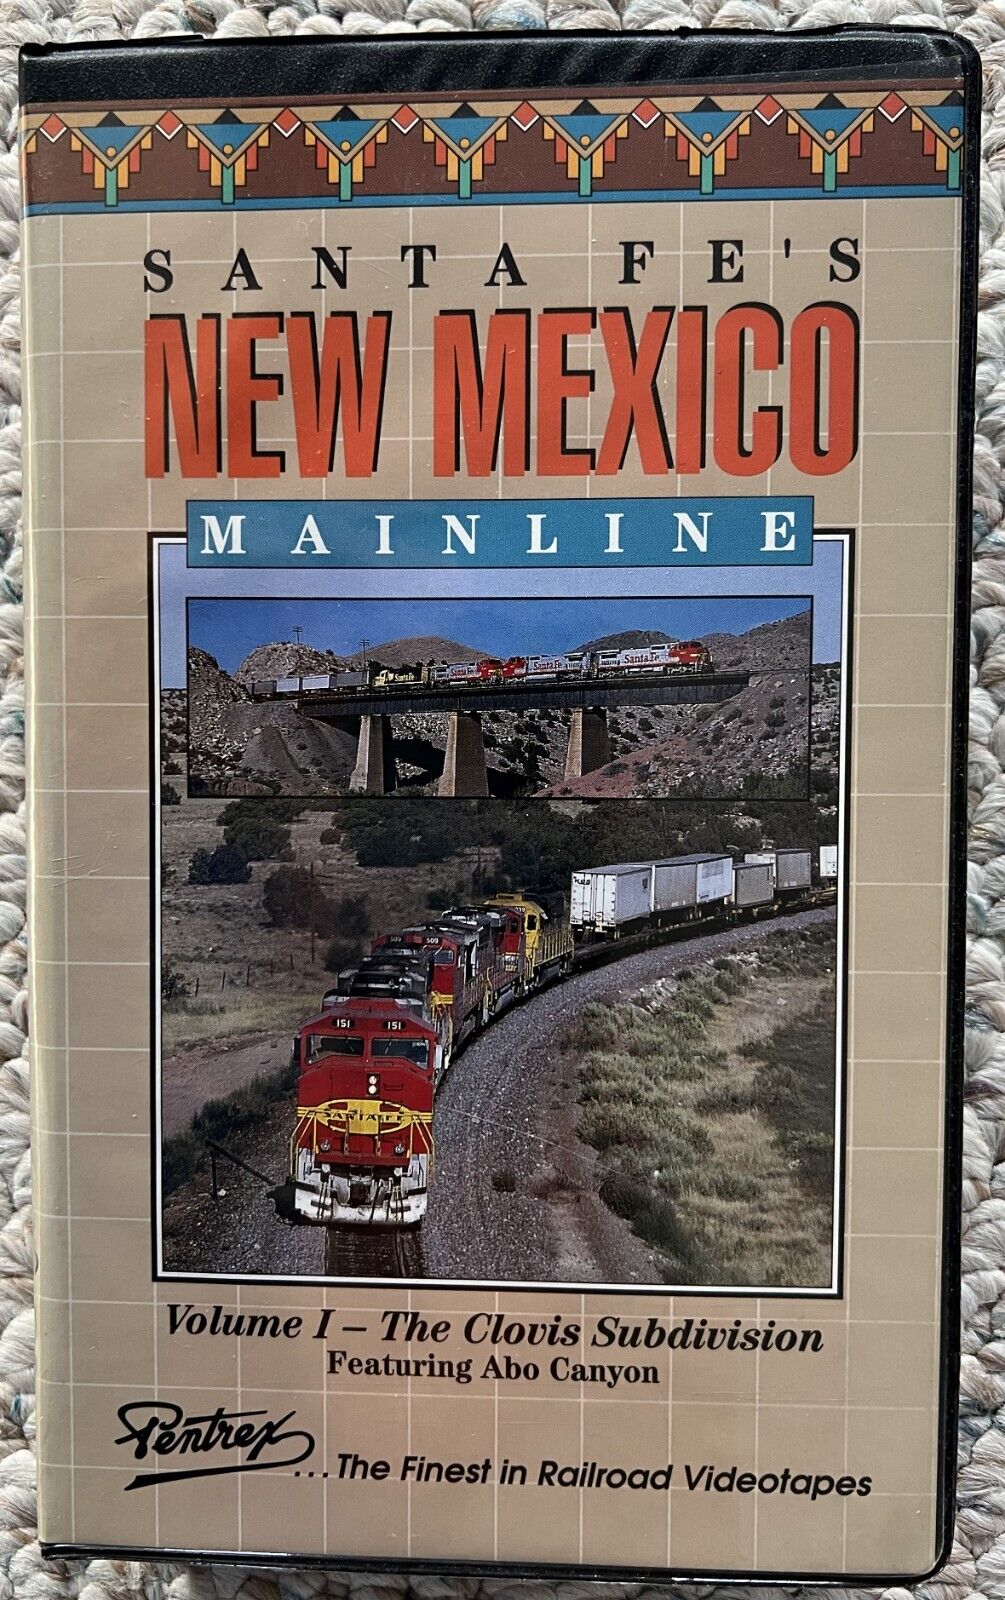 Pentrex VHS Tape Santa Fe\'s New Mexico Mainline Vol I - The Clovis Subdivision